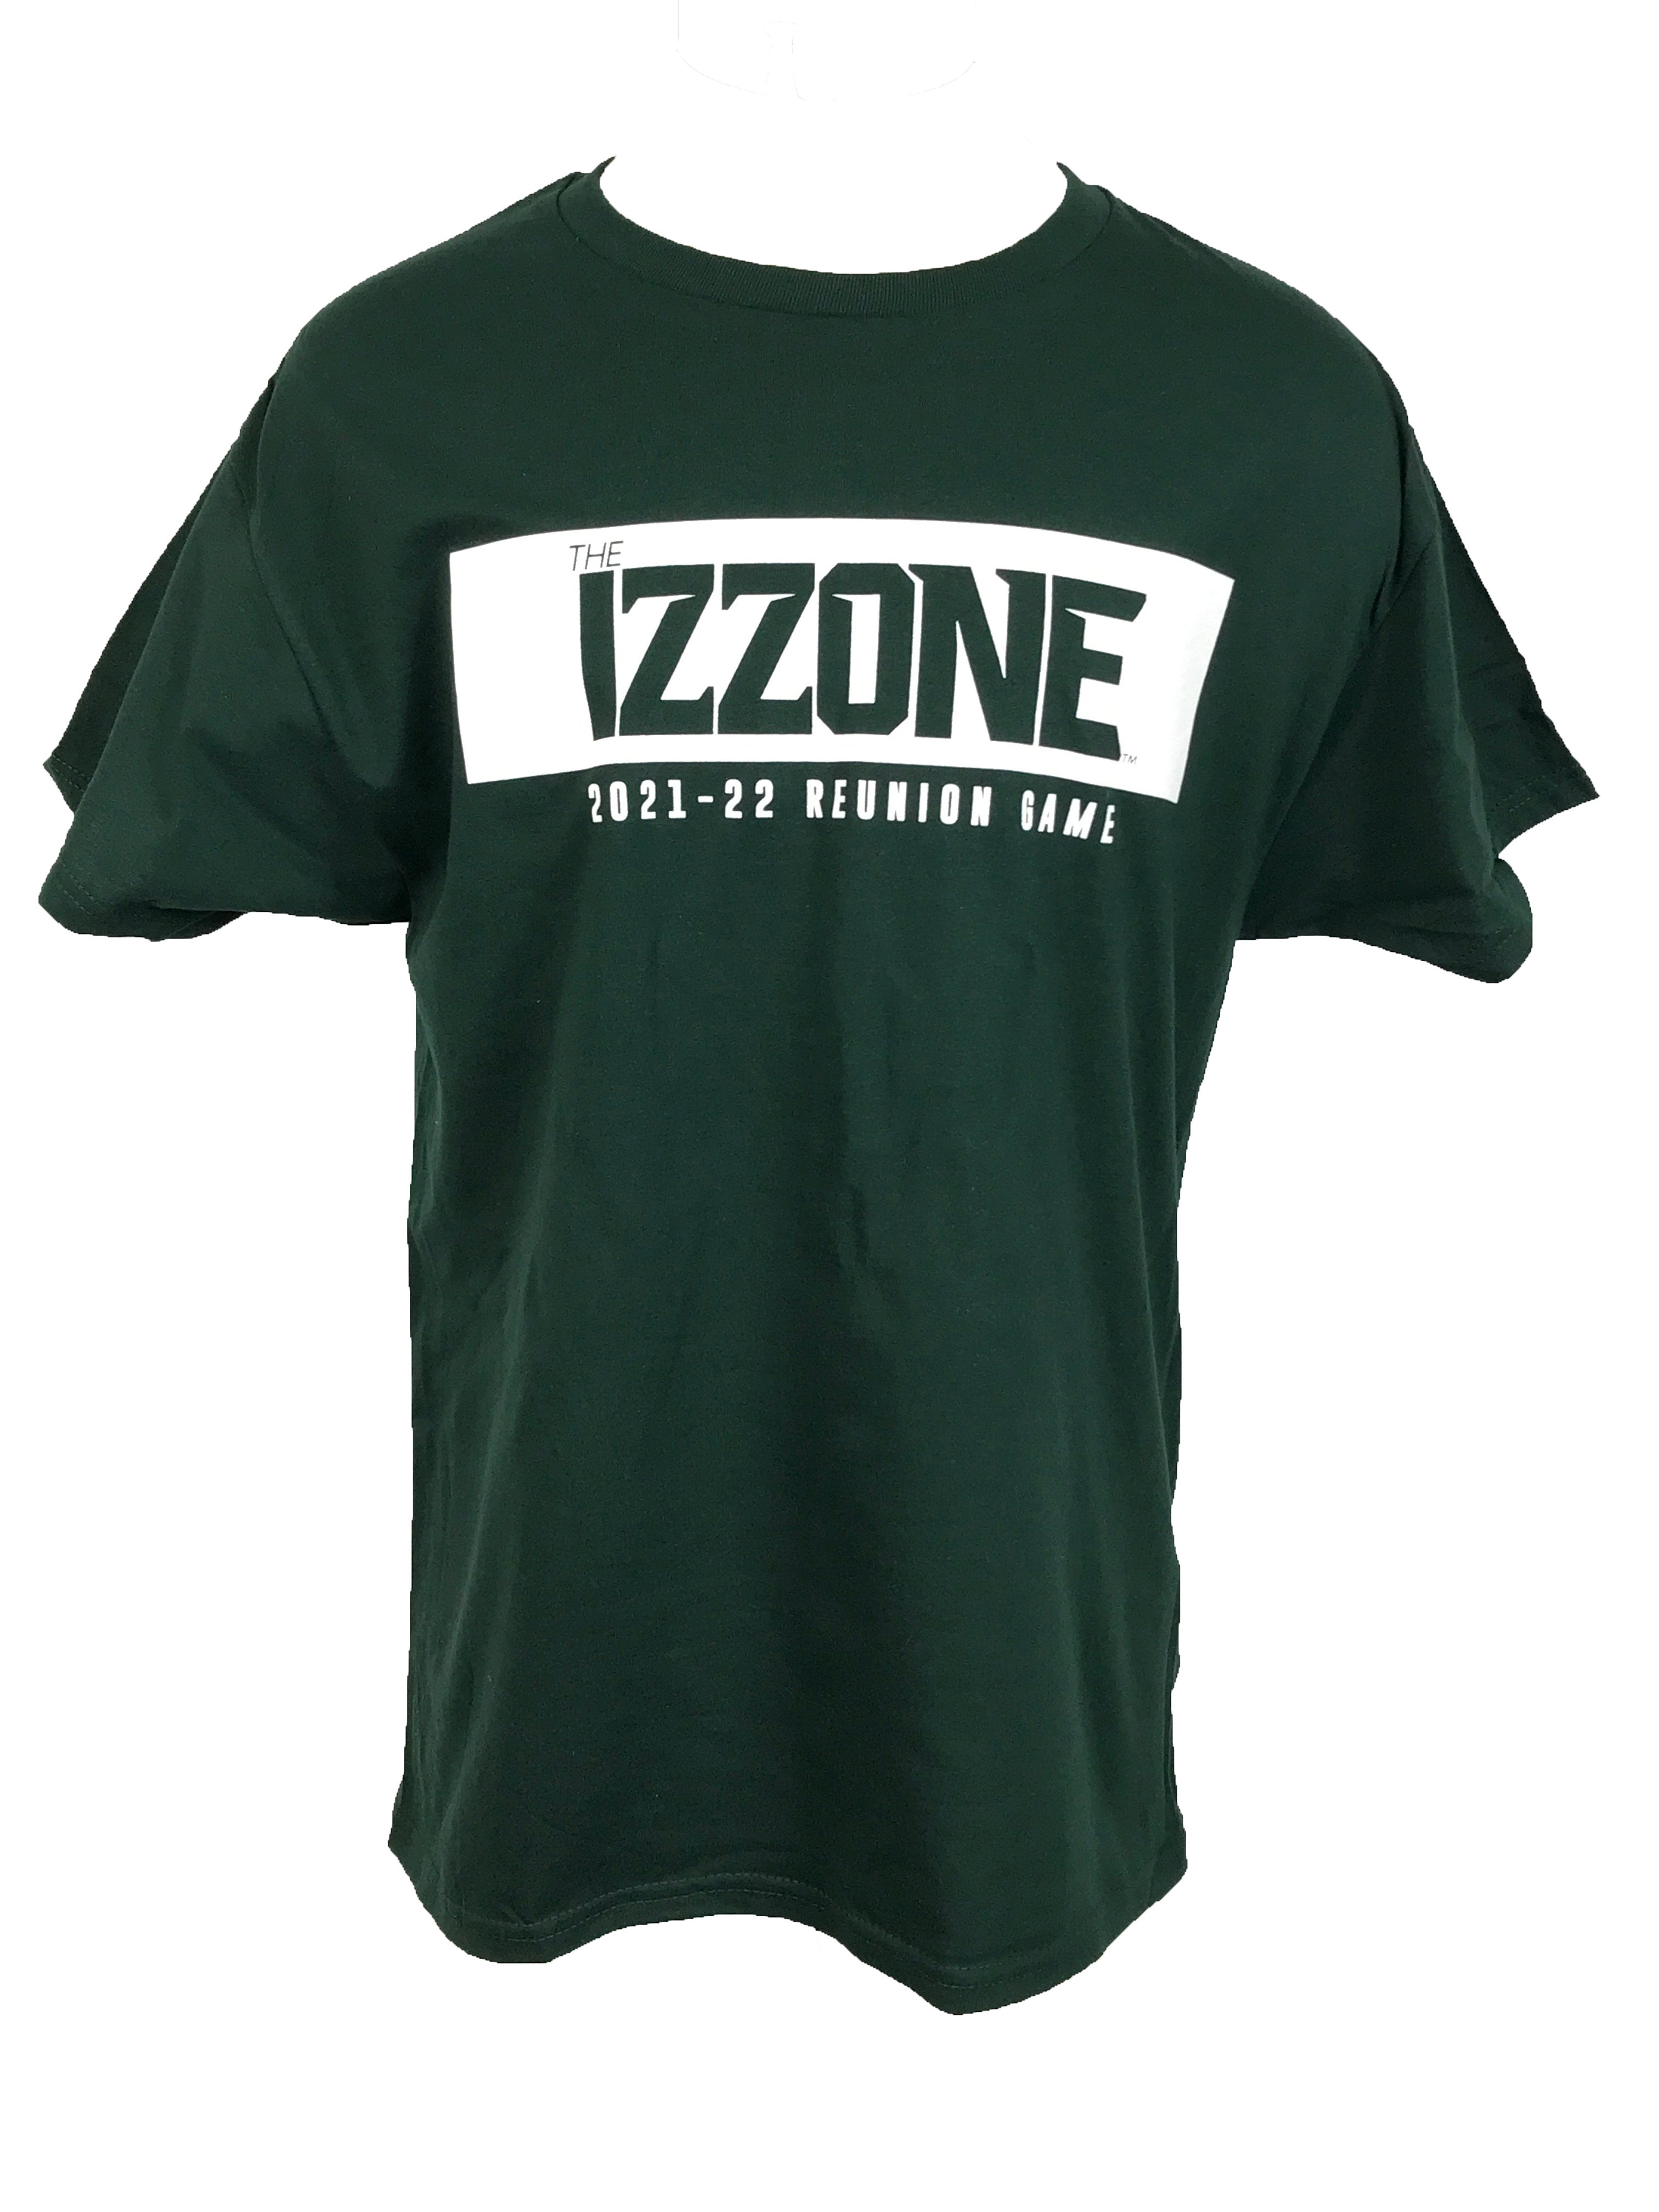 Hanes Green The Izzone 2021-2022 Reunion MSU Basketball T-Shirt Men's Size S